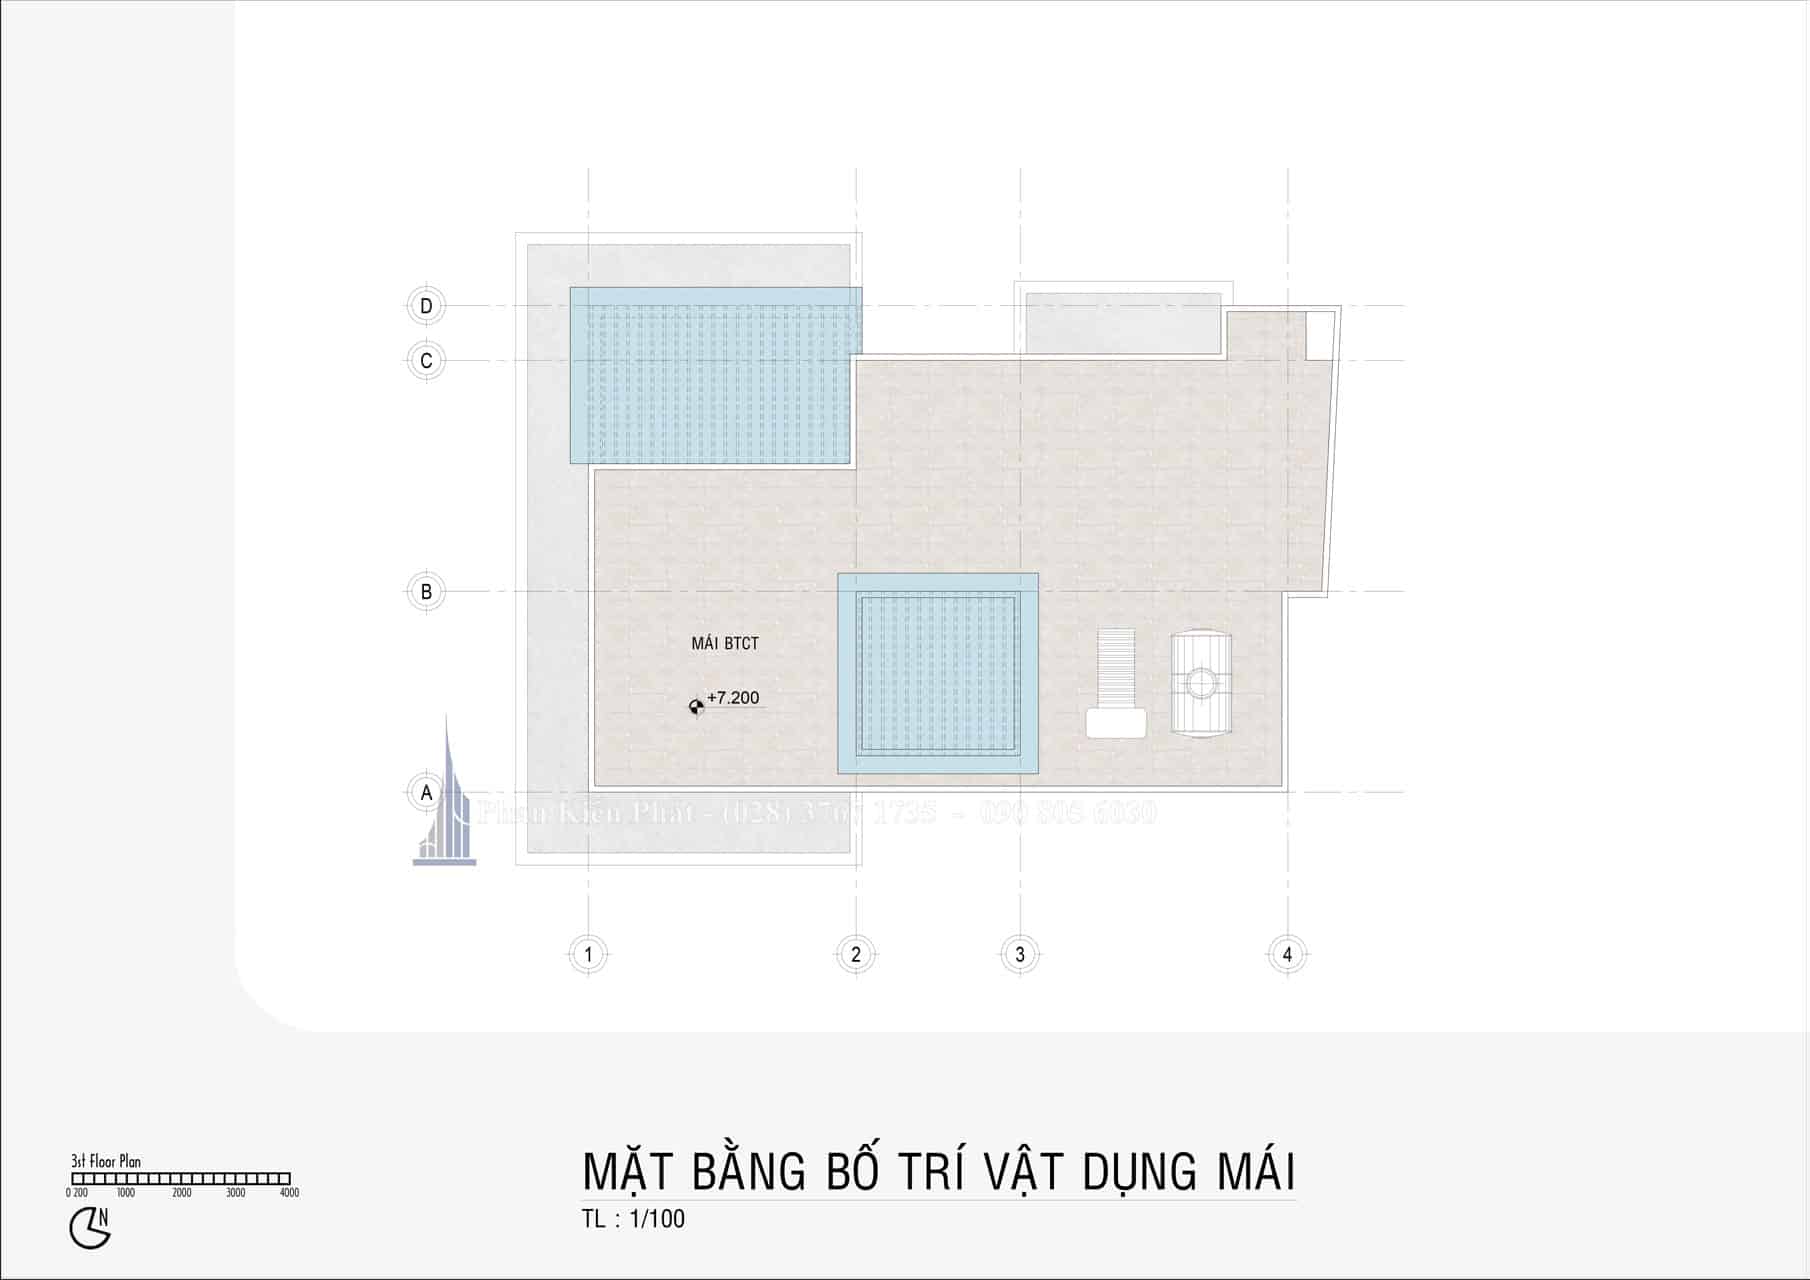 Mat Bang Cong Nang Biet Thu Hien Dai 1 Tret 1 Lau Tai Phan Thiet 3